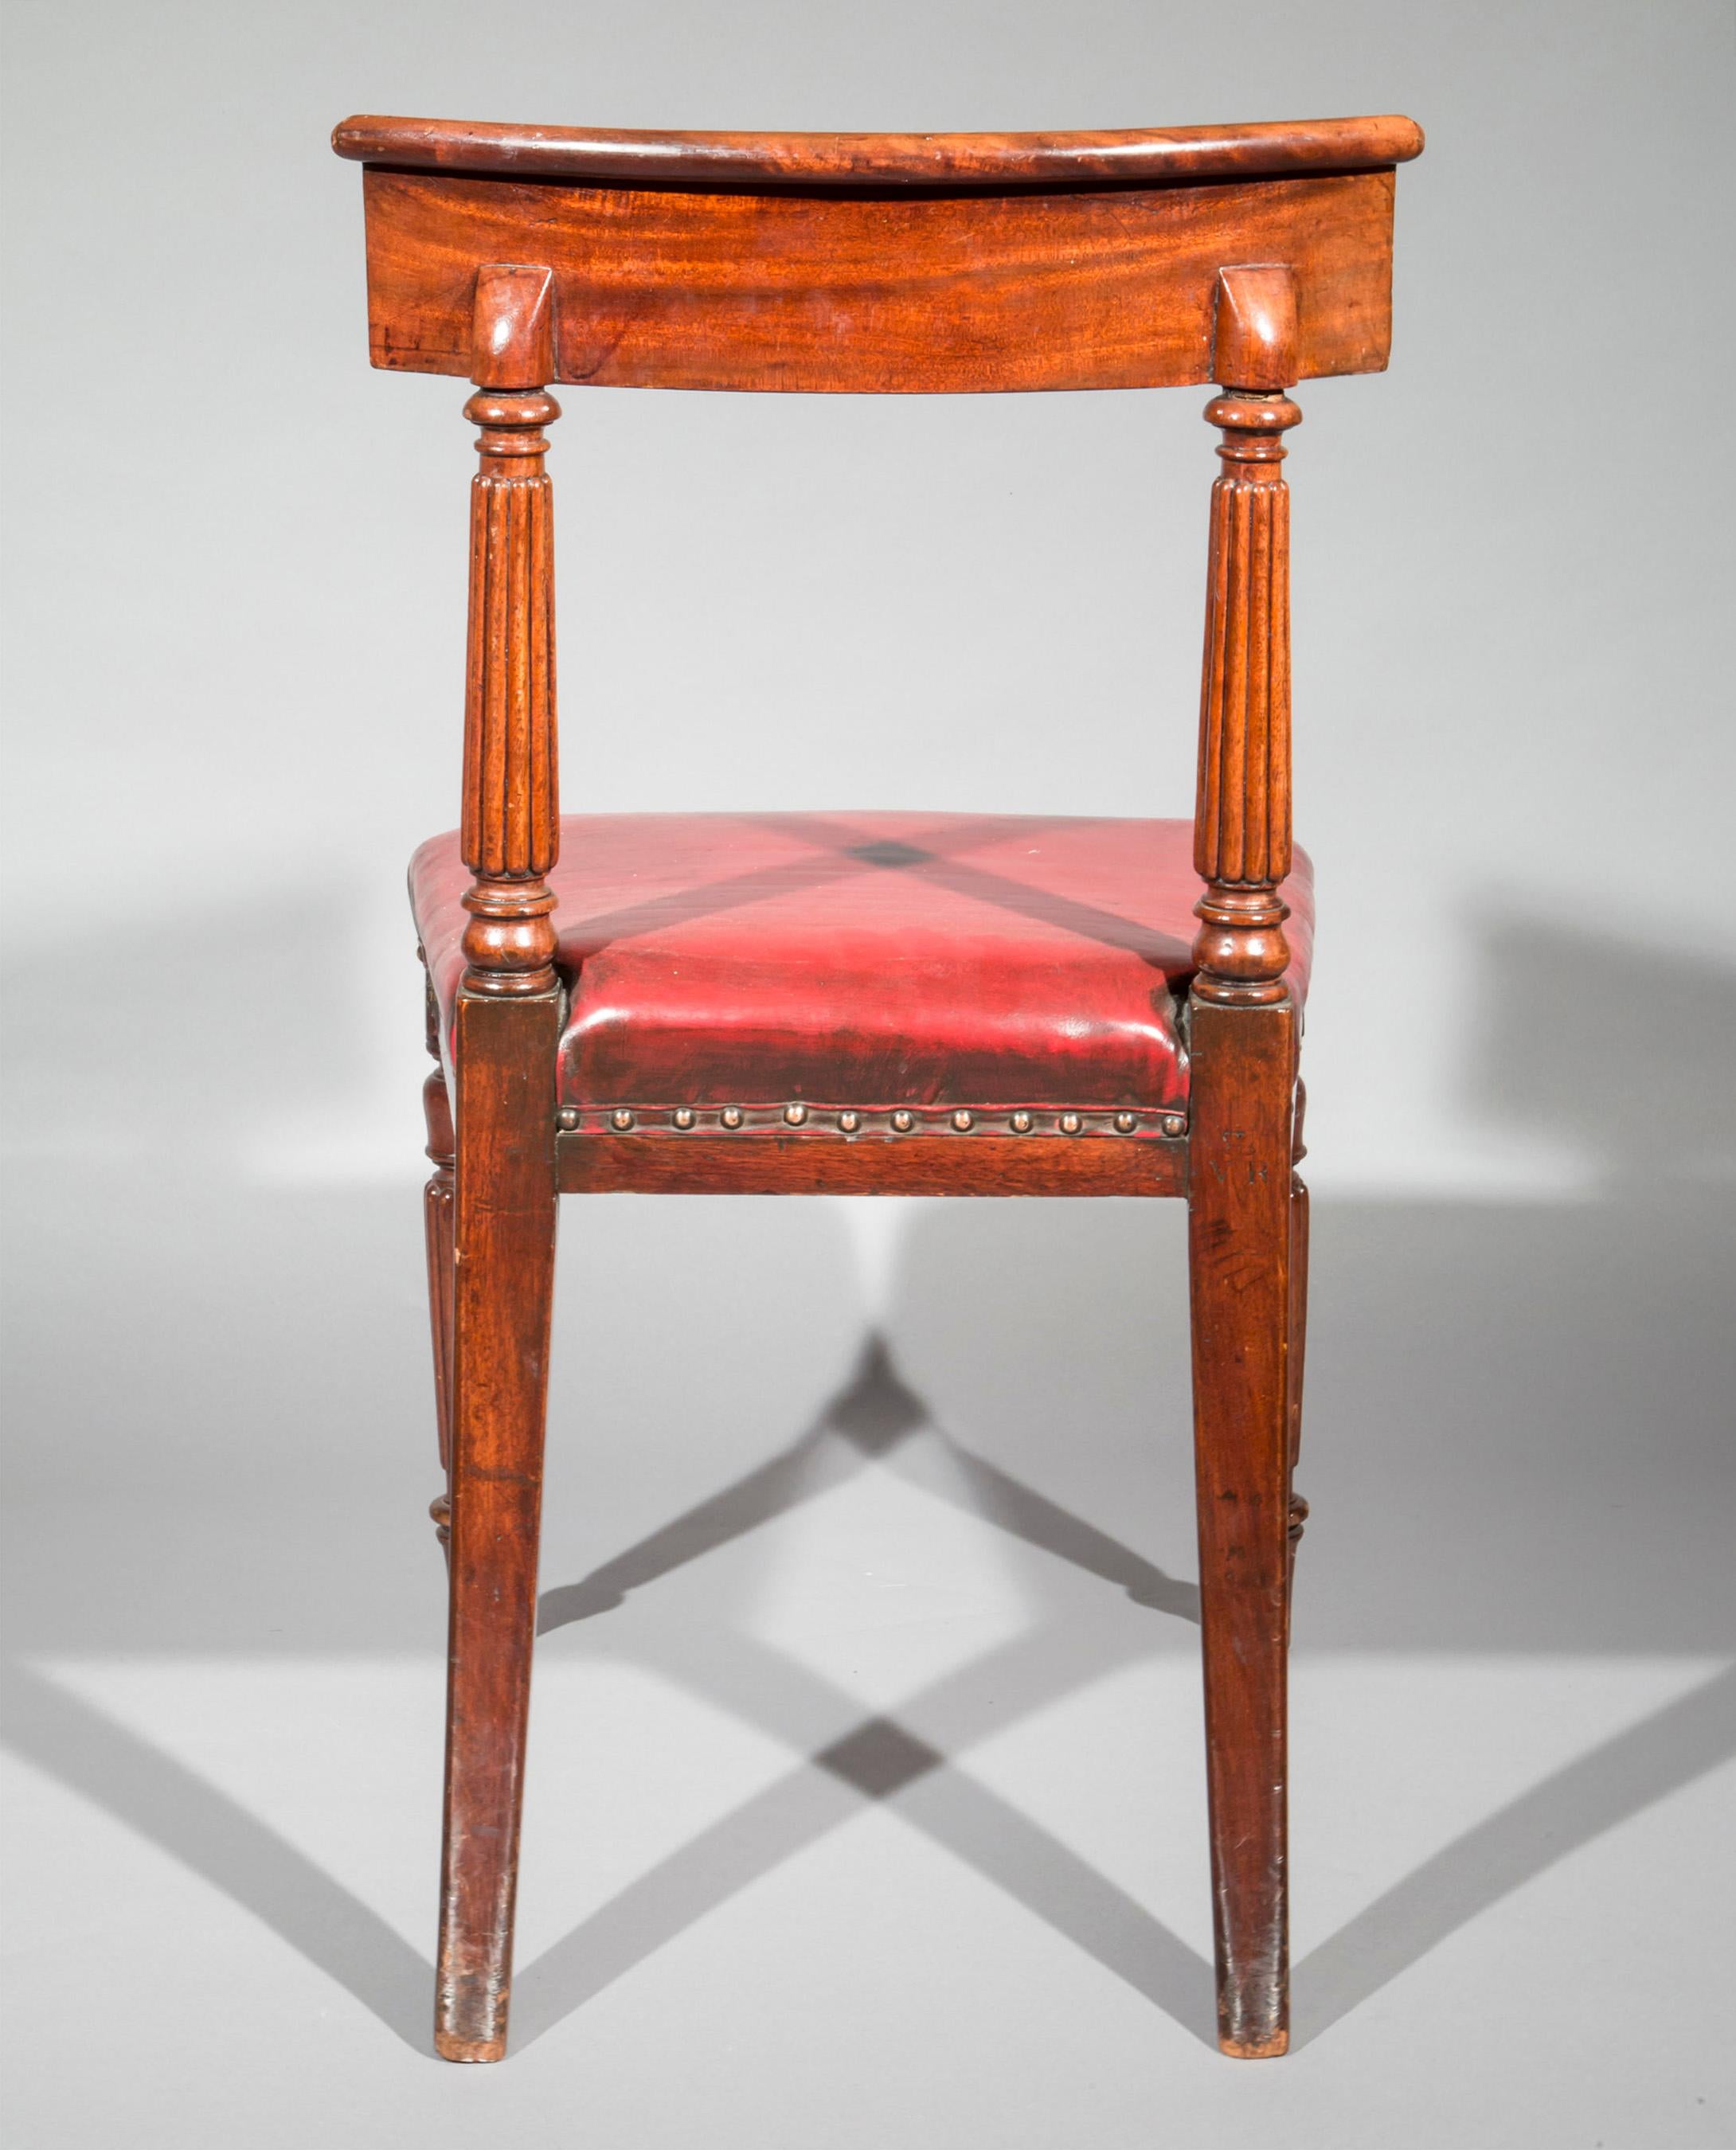 Antique Regency Royal Desk Chair in Burgundy Leather 3